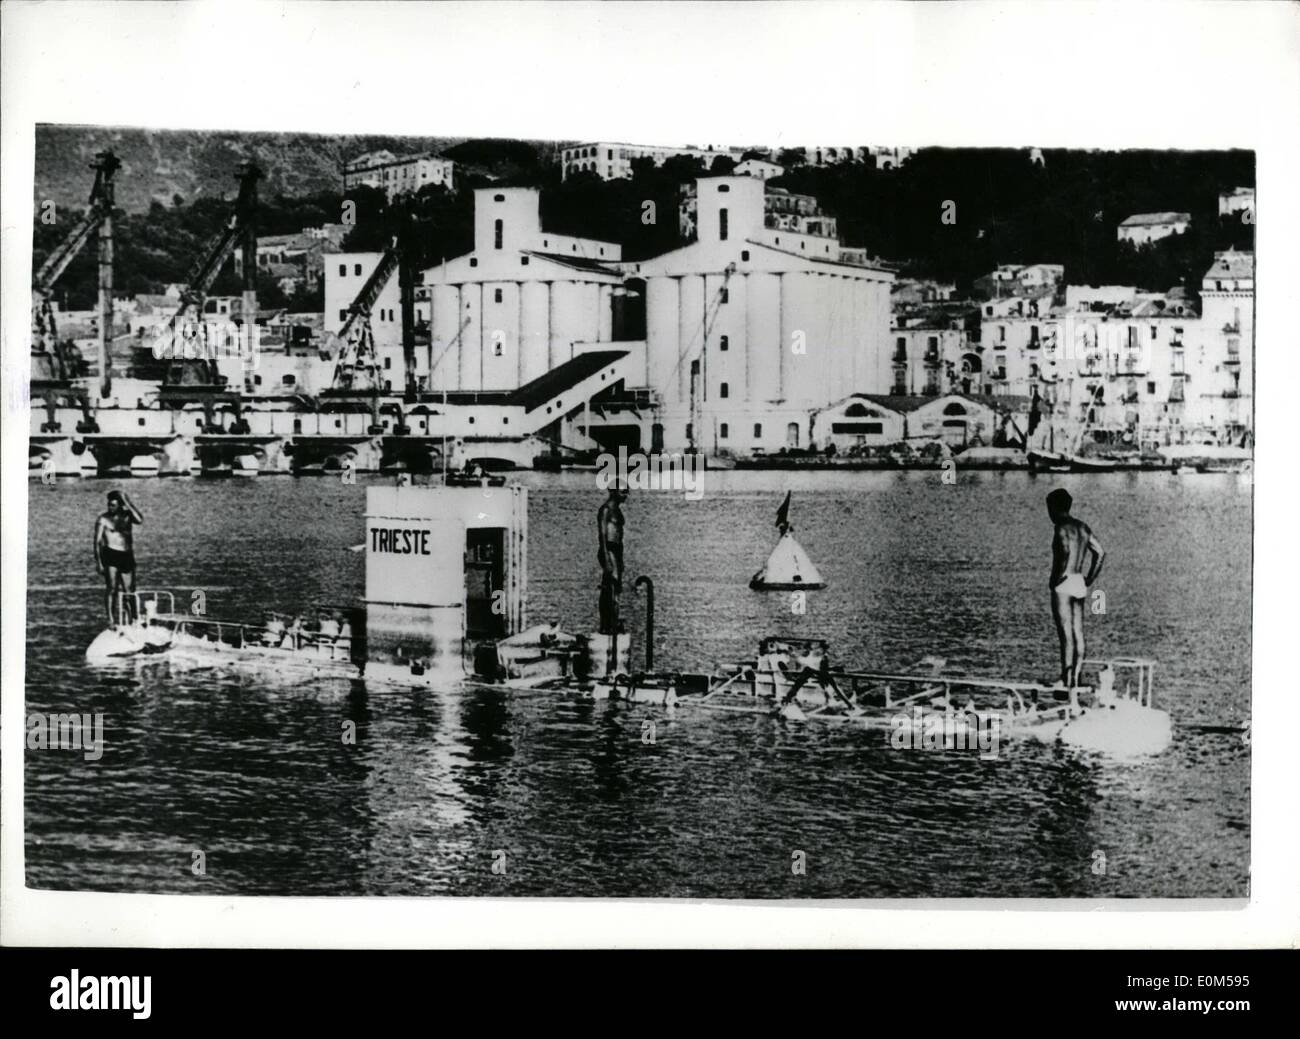 ShkXtreme on X: #Bathyscaphe #Trieste #Bathysphere: record